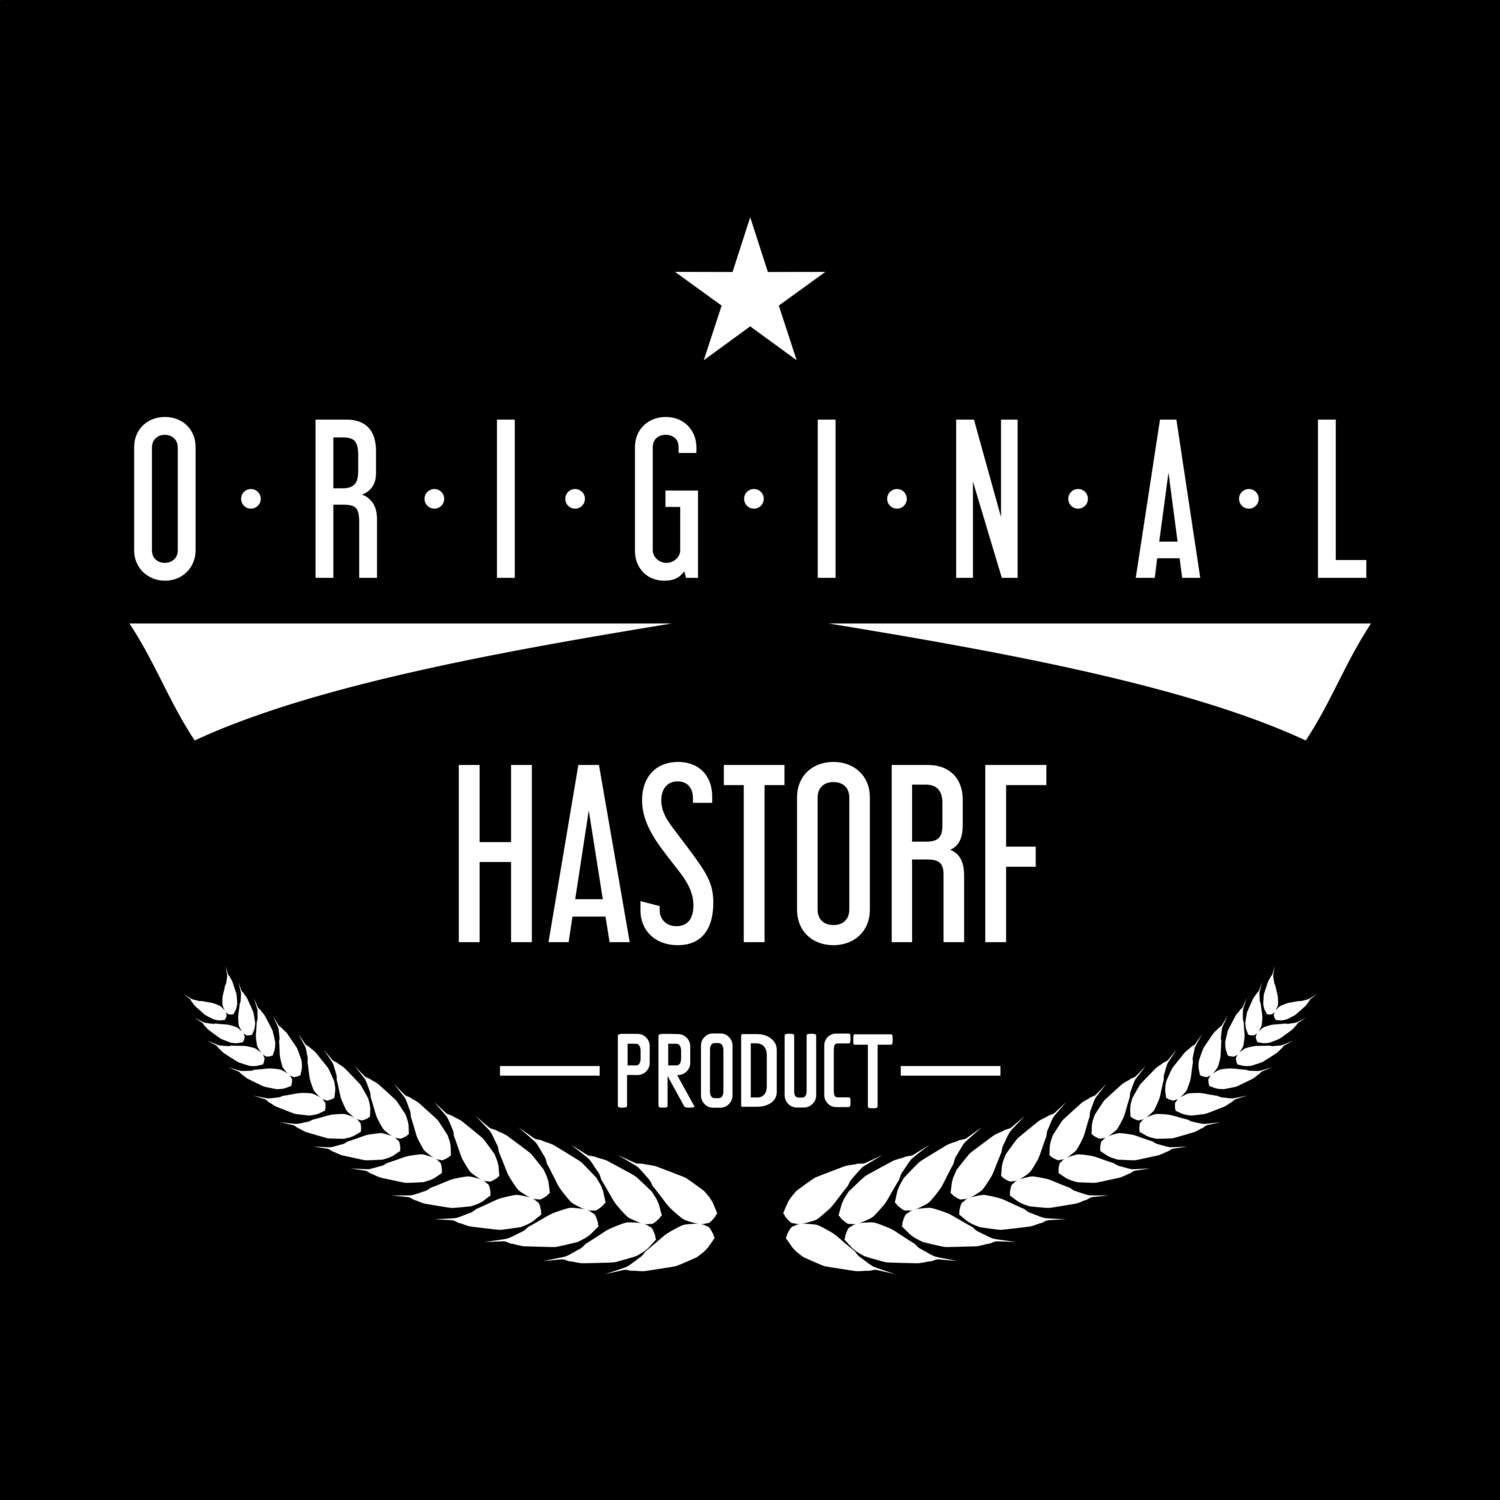 Hastorf T-Shirt »Original Product«